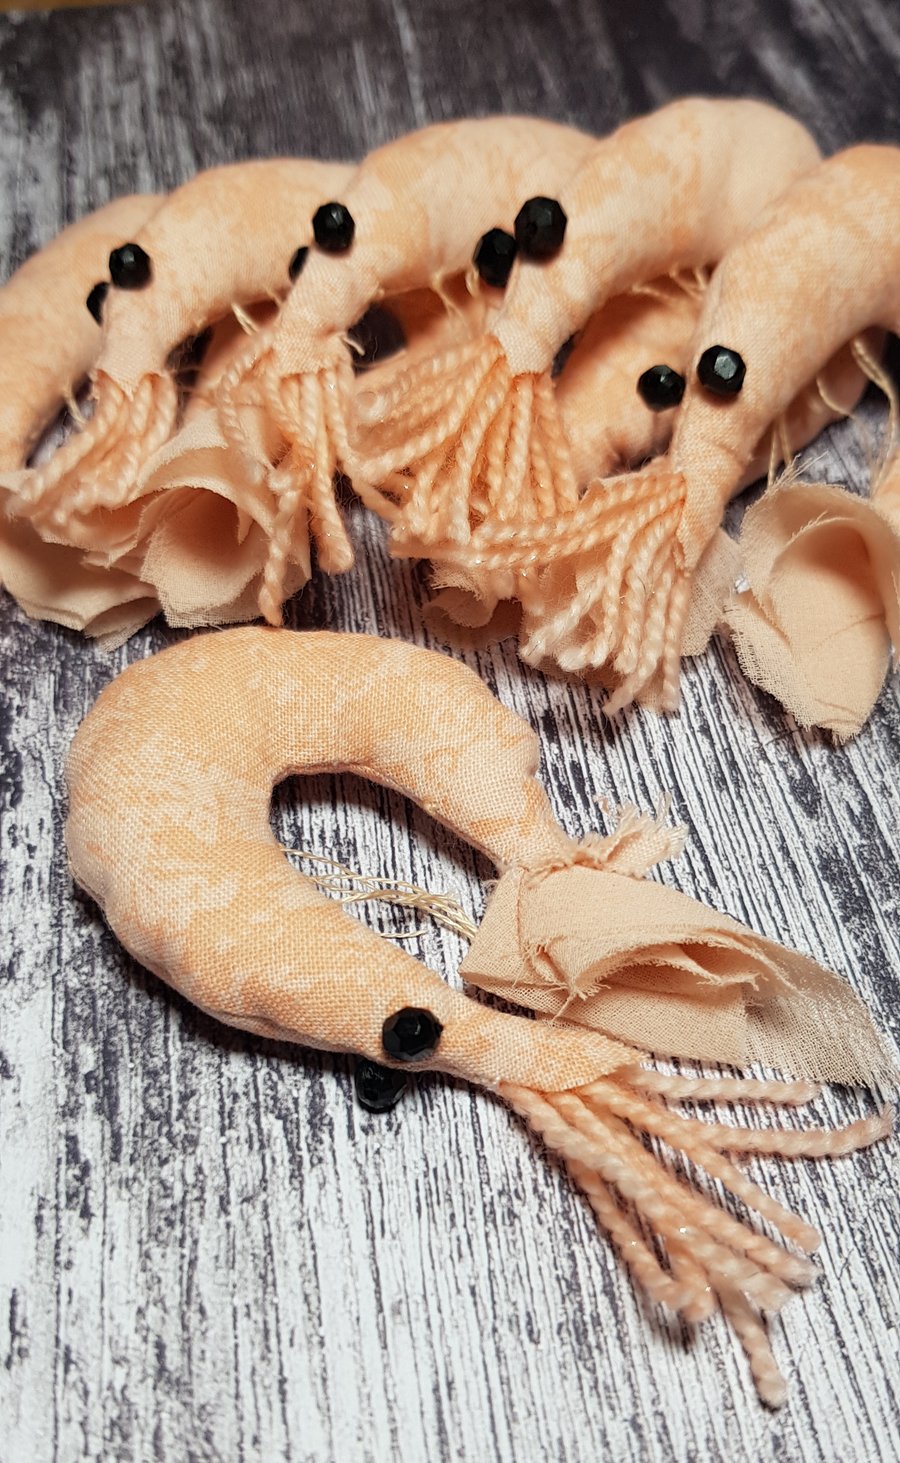 Textile Decorative Shrimp Prawns Sea Creatures as Brooches or Hangers